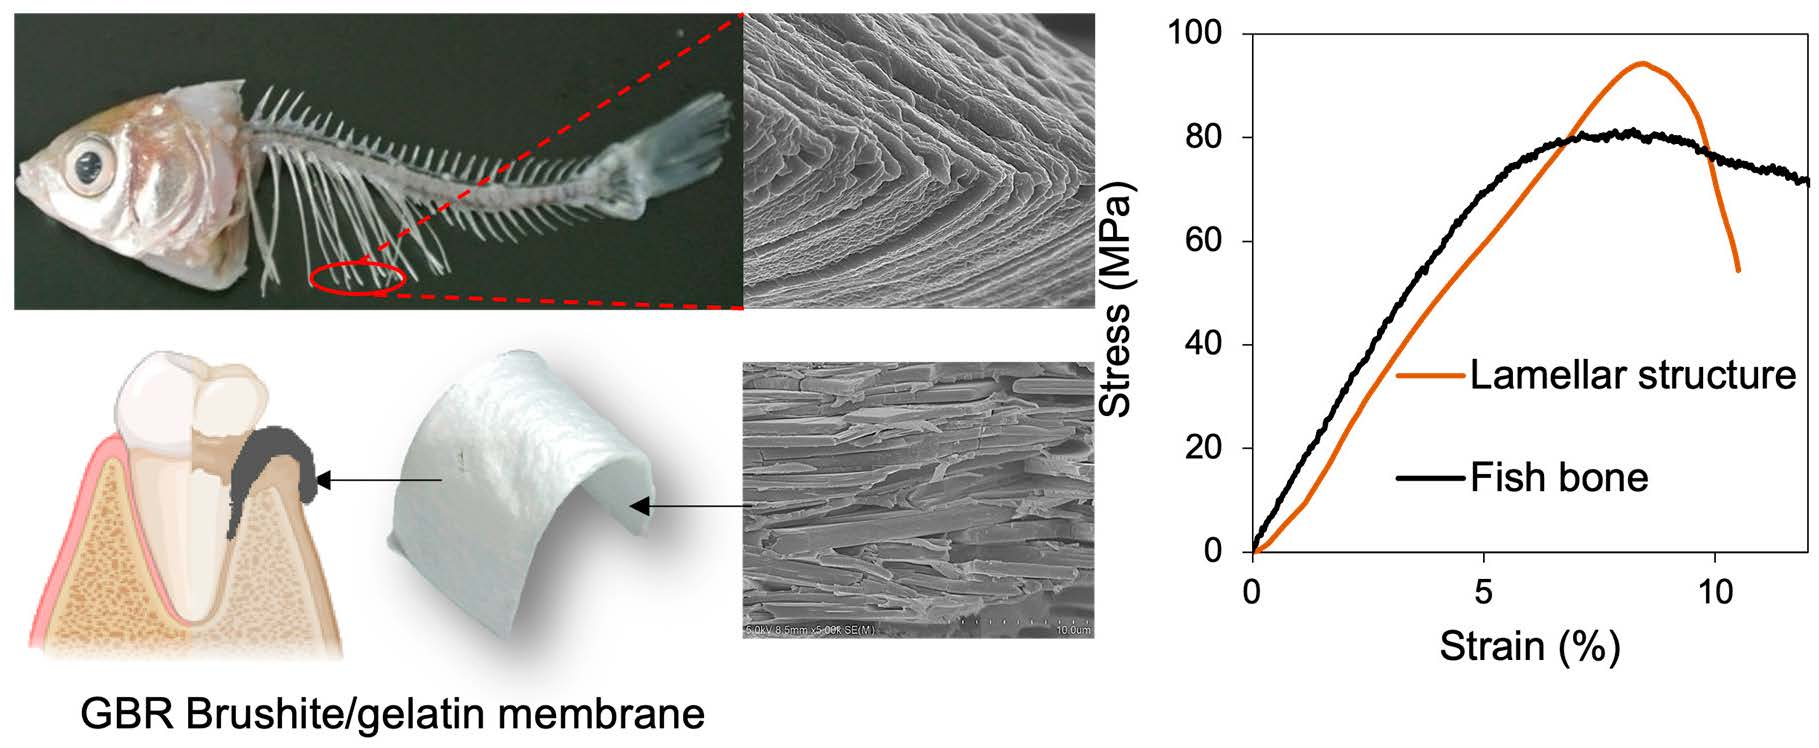 Real Fish Skeleton Model - Fish Skeleton Embedded Specimen Model -  Biological Teaching Model Fish Bone Model - for Scientific Teaching  Research, Lab